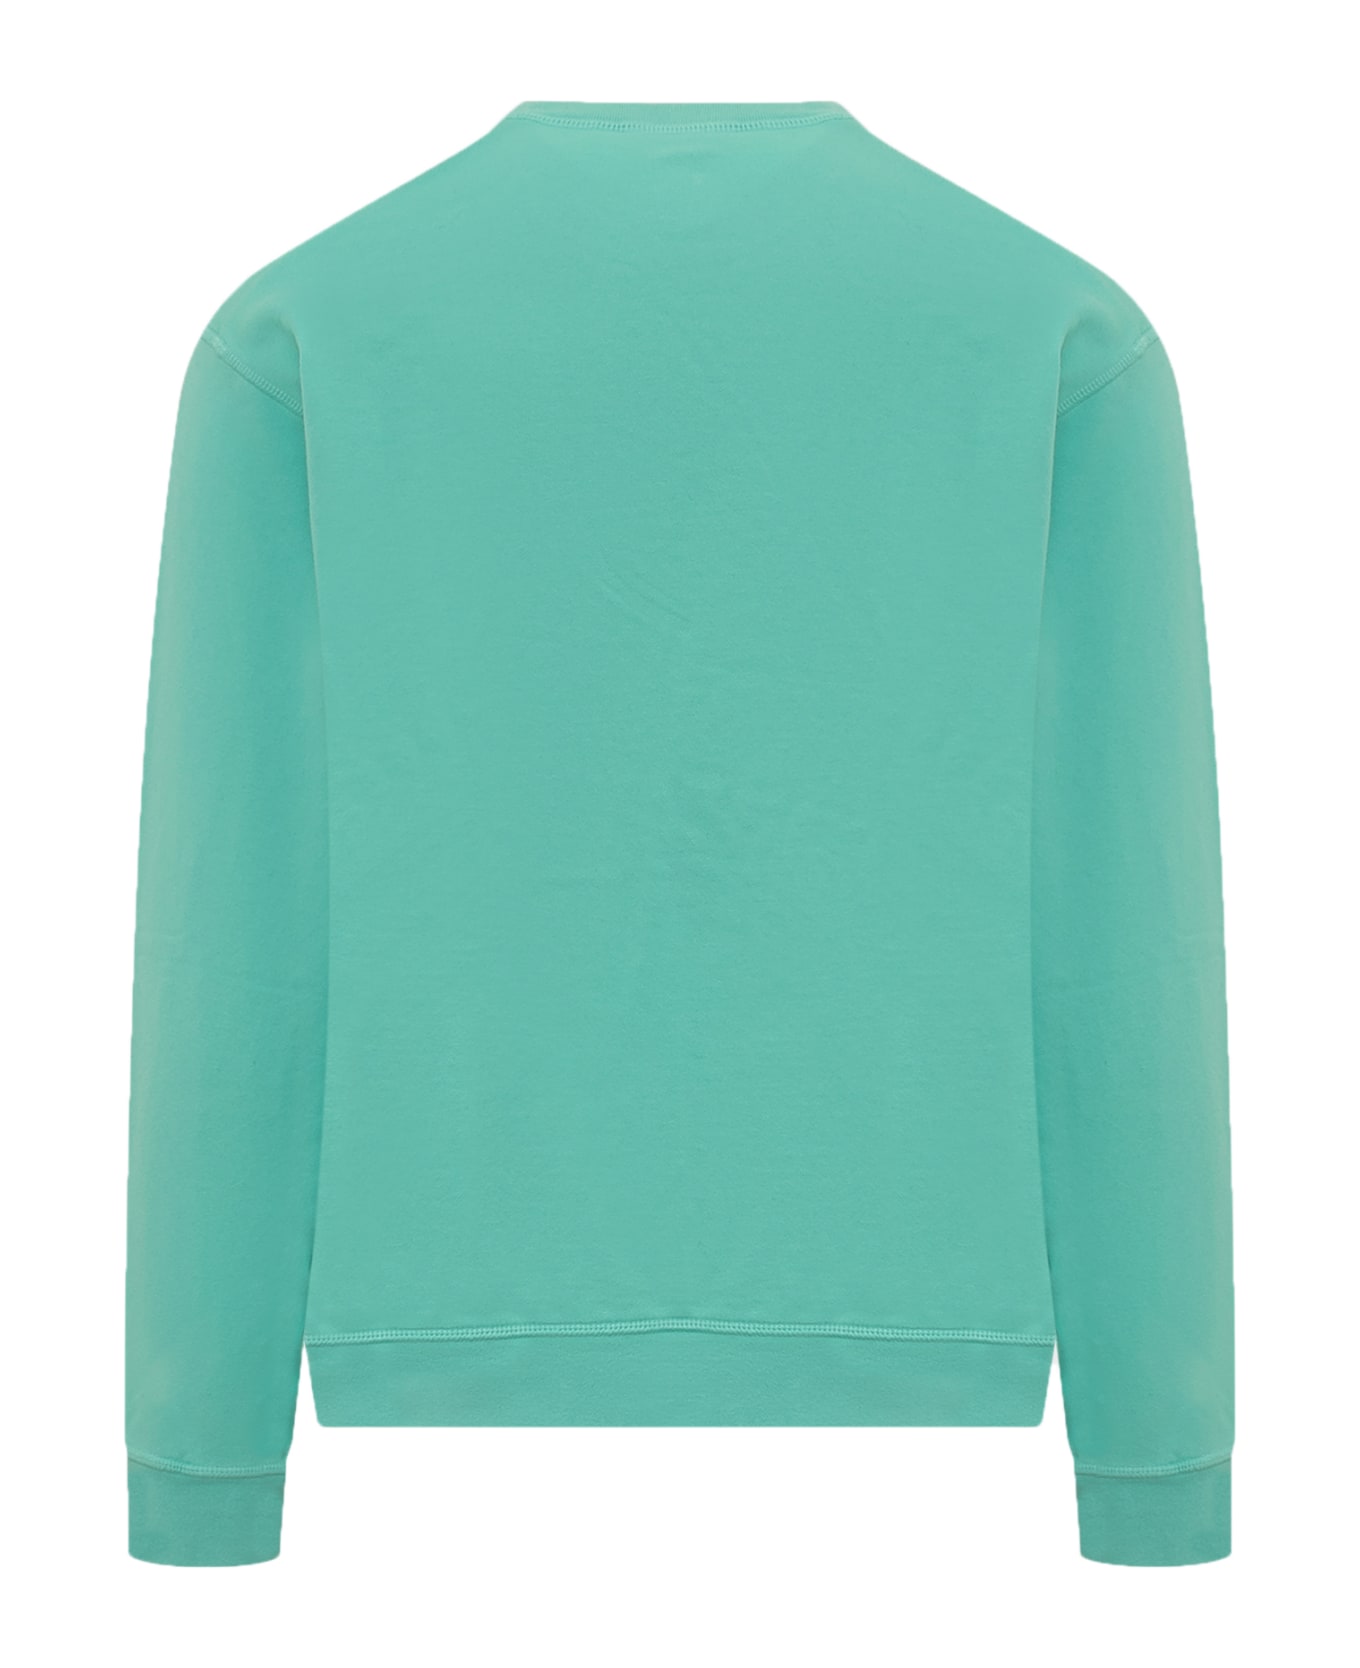 Dsquared2 Cotton Sweatshirt - PALE GREEN